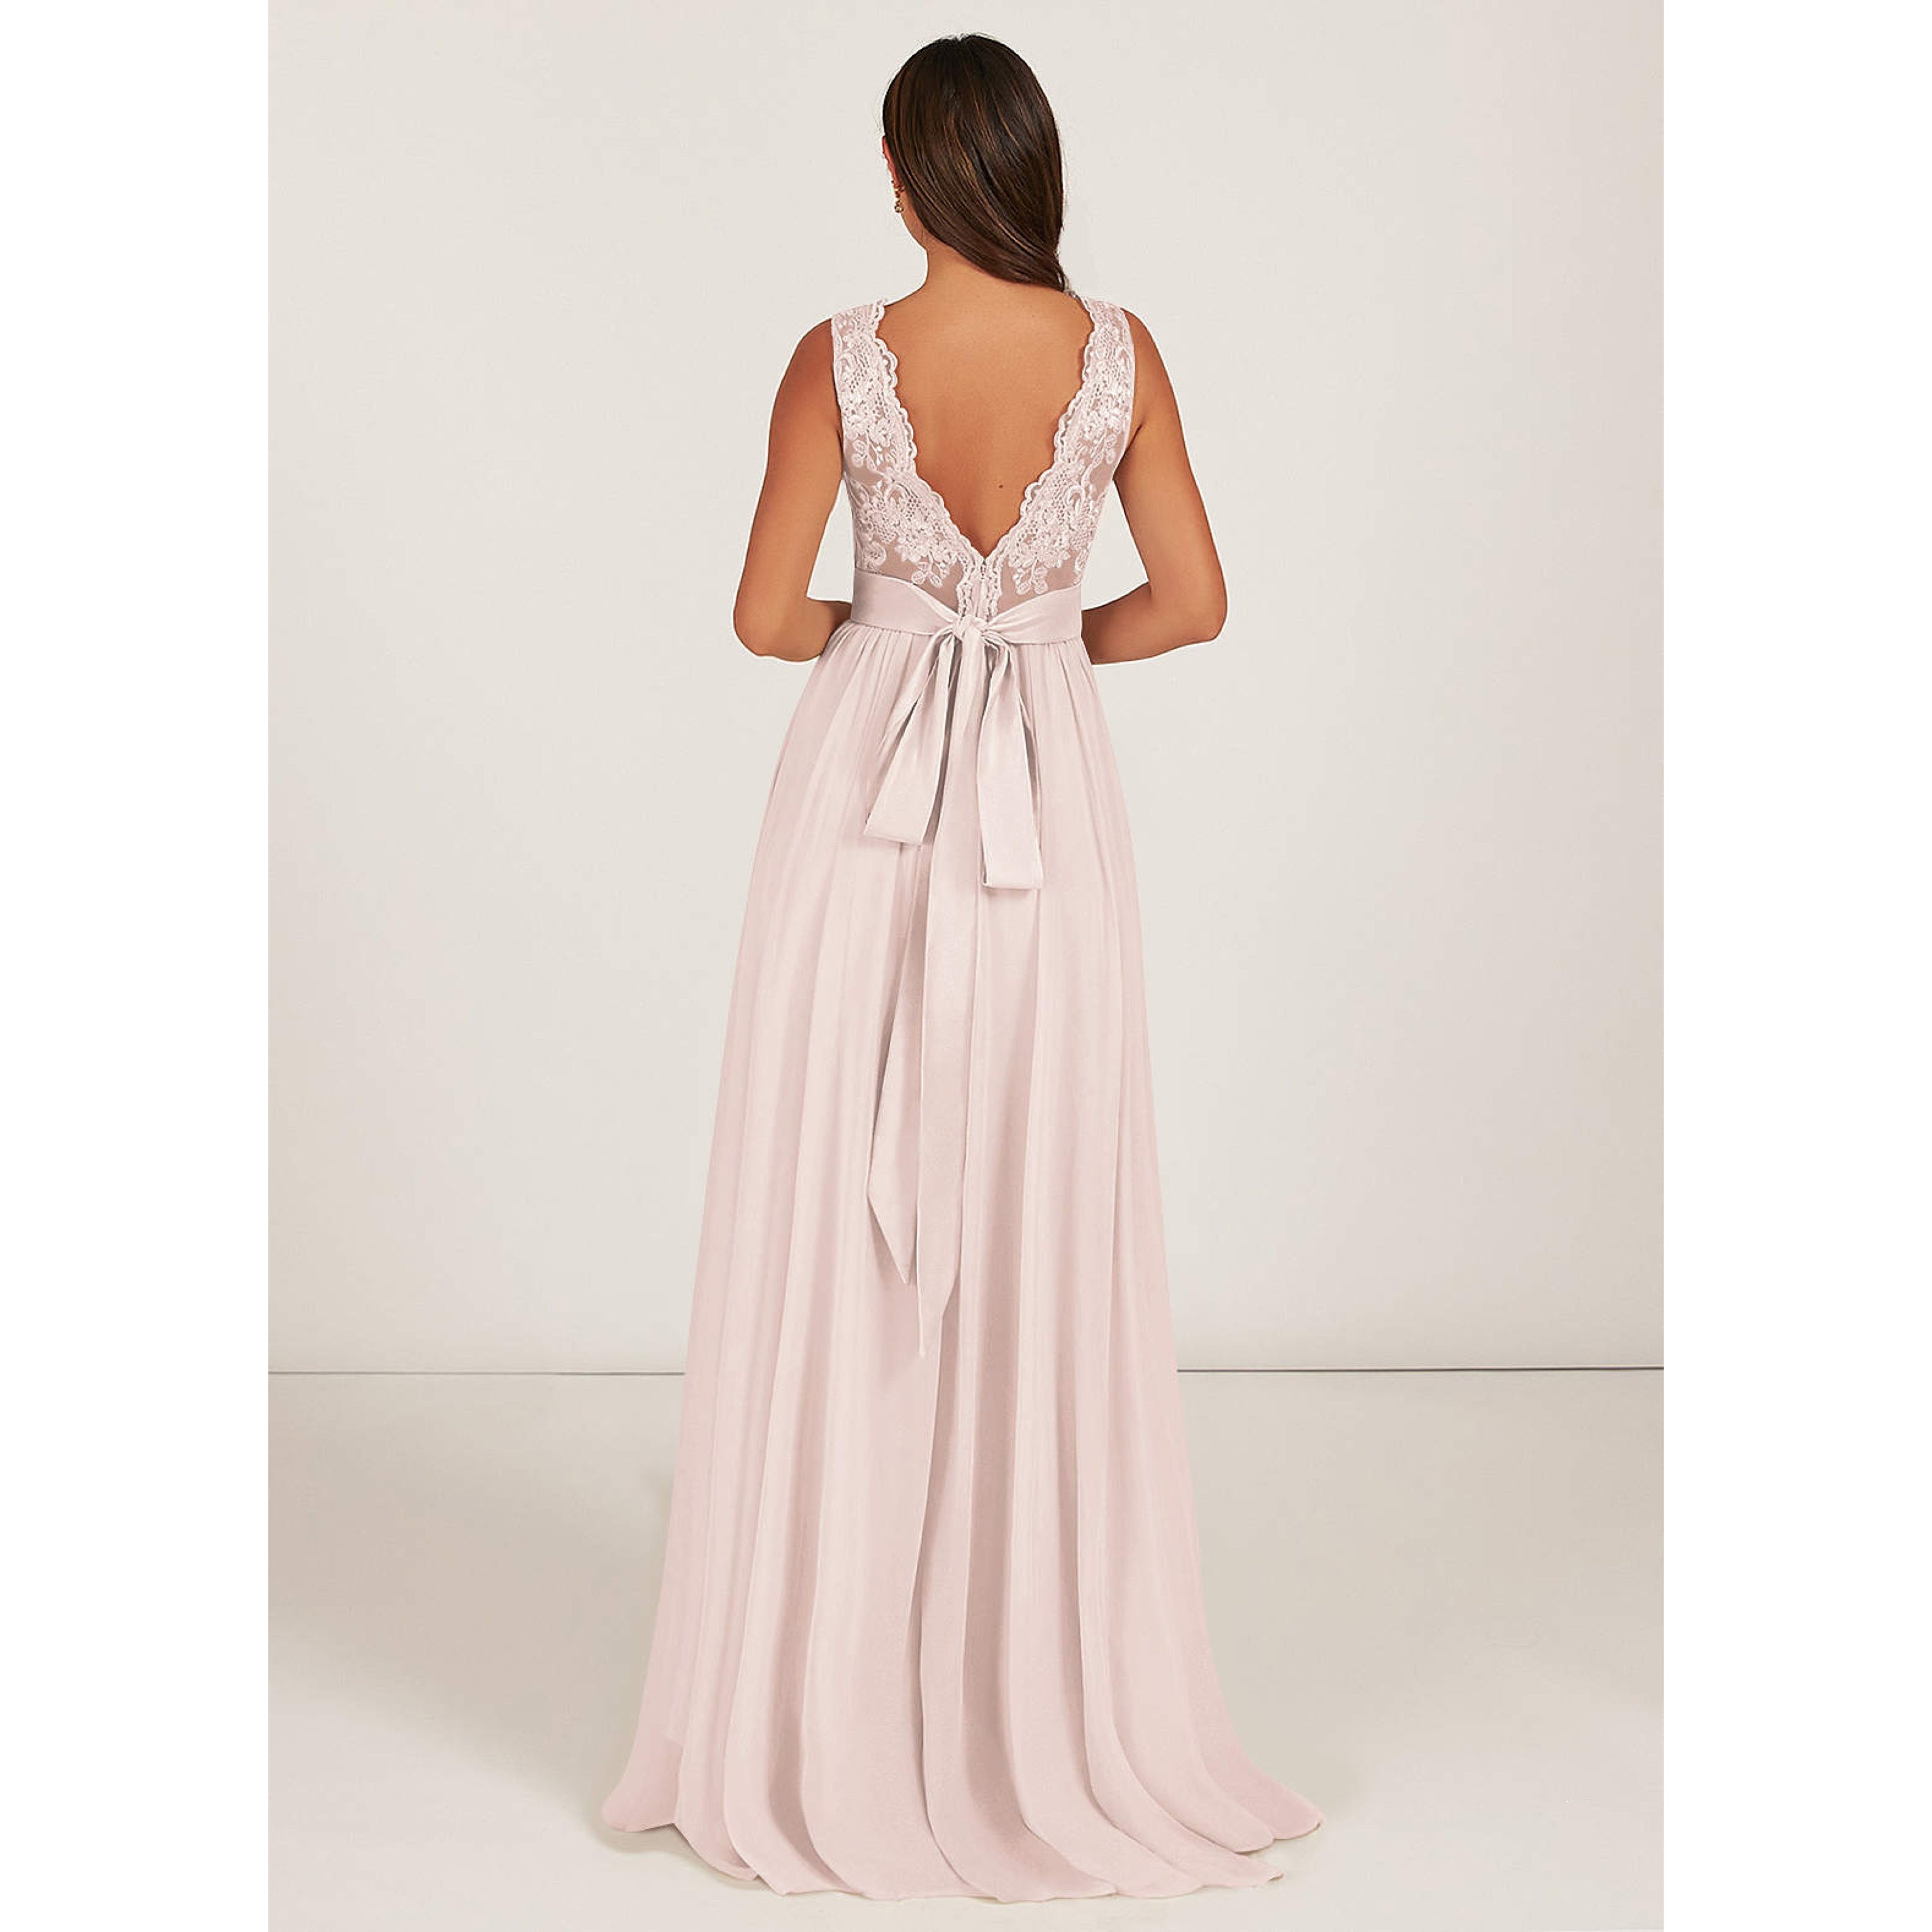 Azazie pale pink dress, size 24